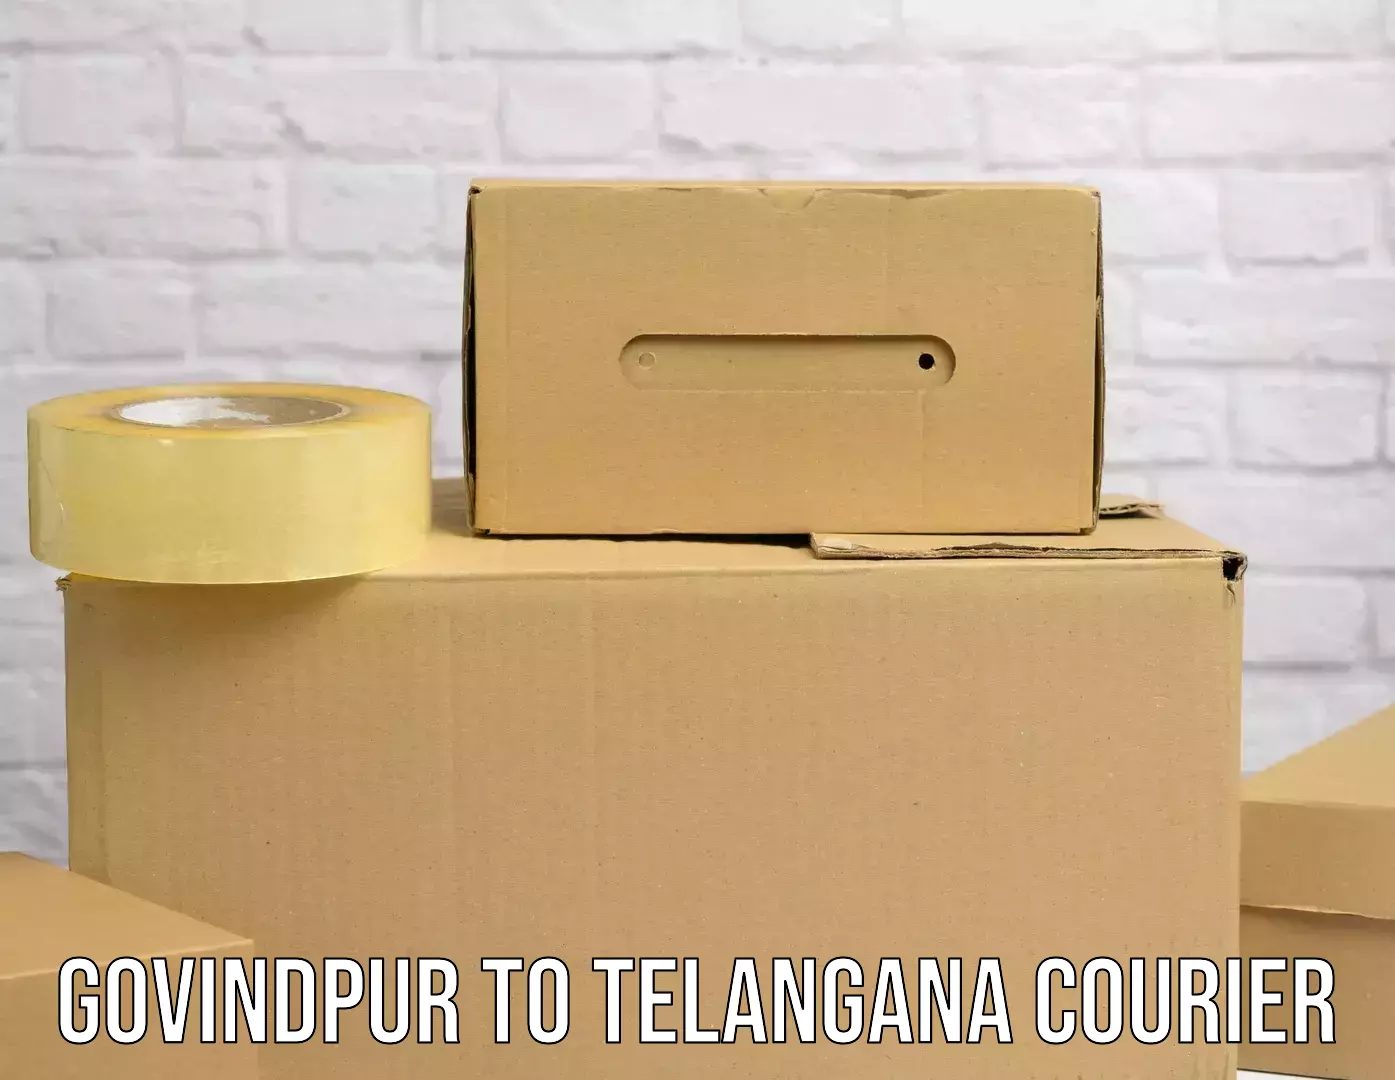 Courier service partnerships Govindpur to Sathupally